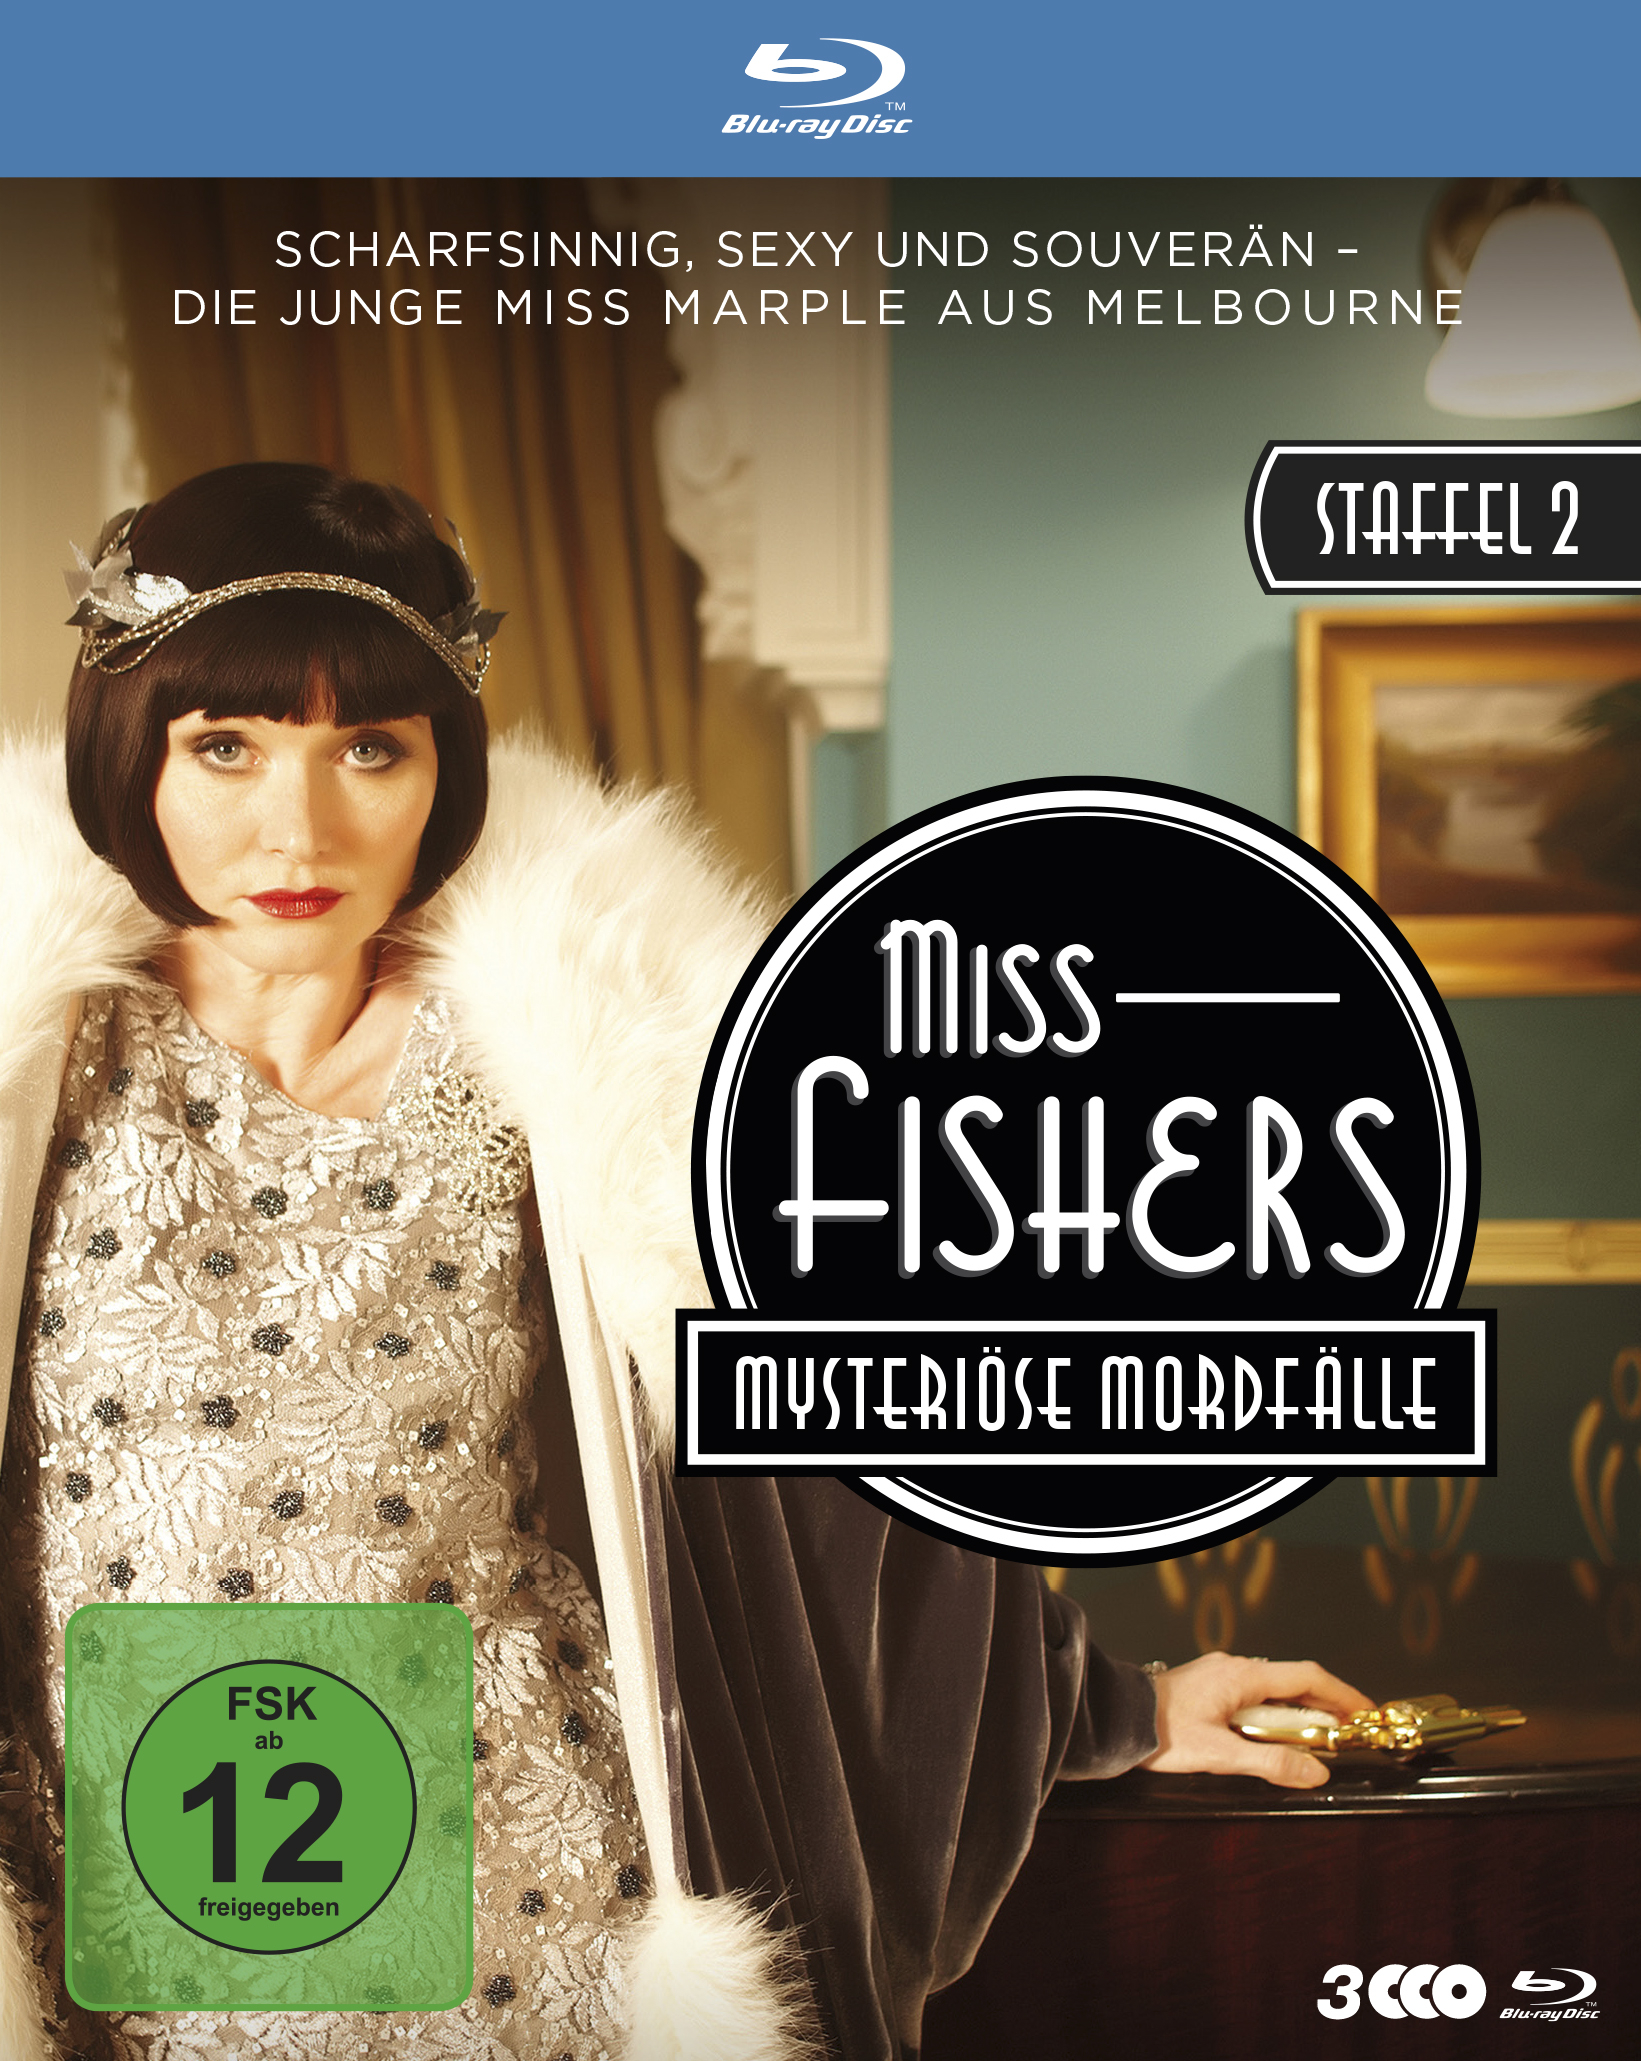 Miss Mordfälle - Blu-ray Fishers Staffel mysteriöse 2